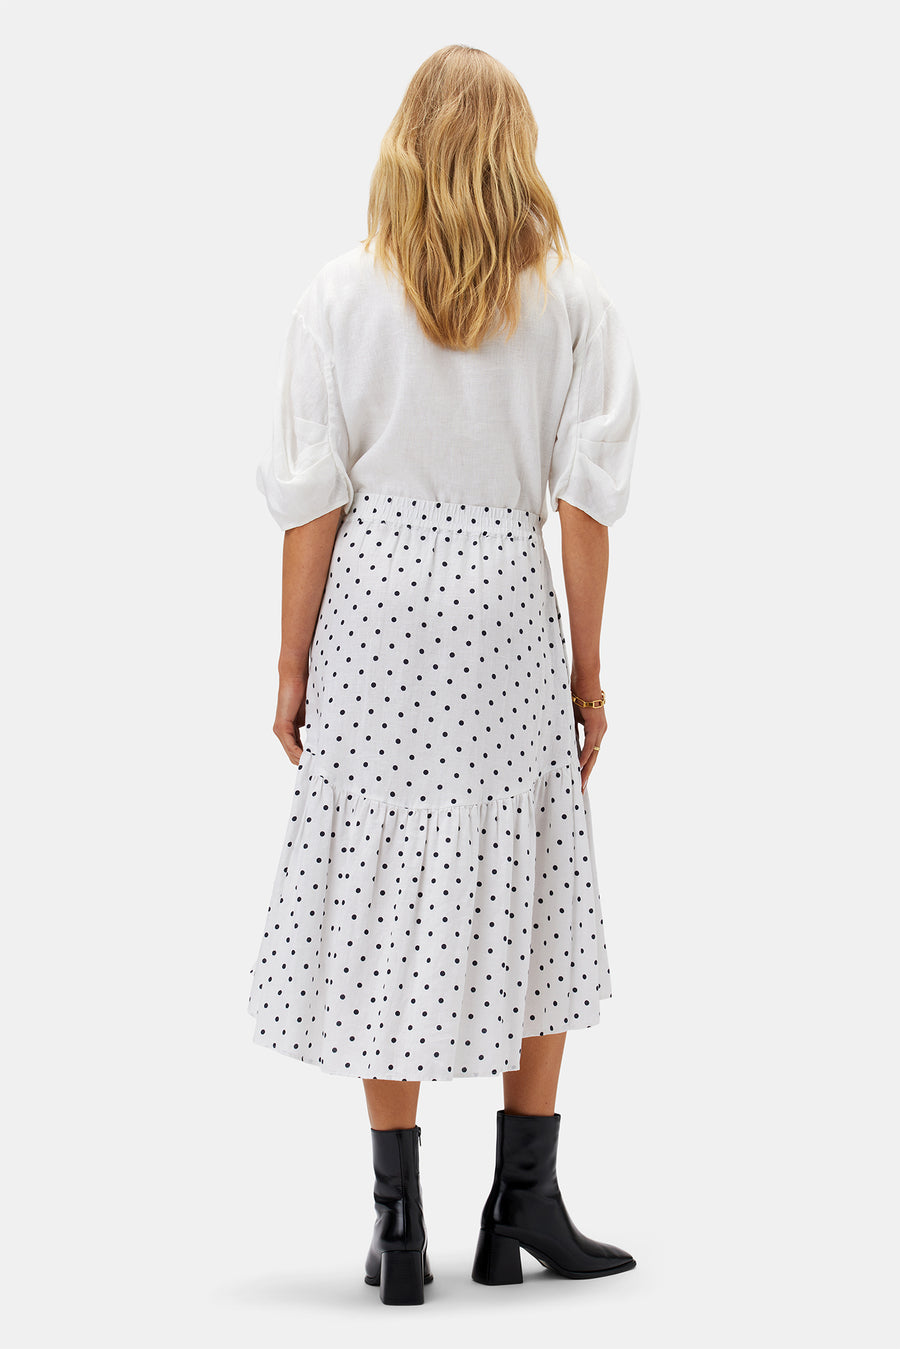 Lilly Pilly Lola Organic Linen Skirt - Polka Dots